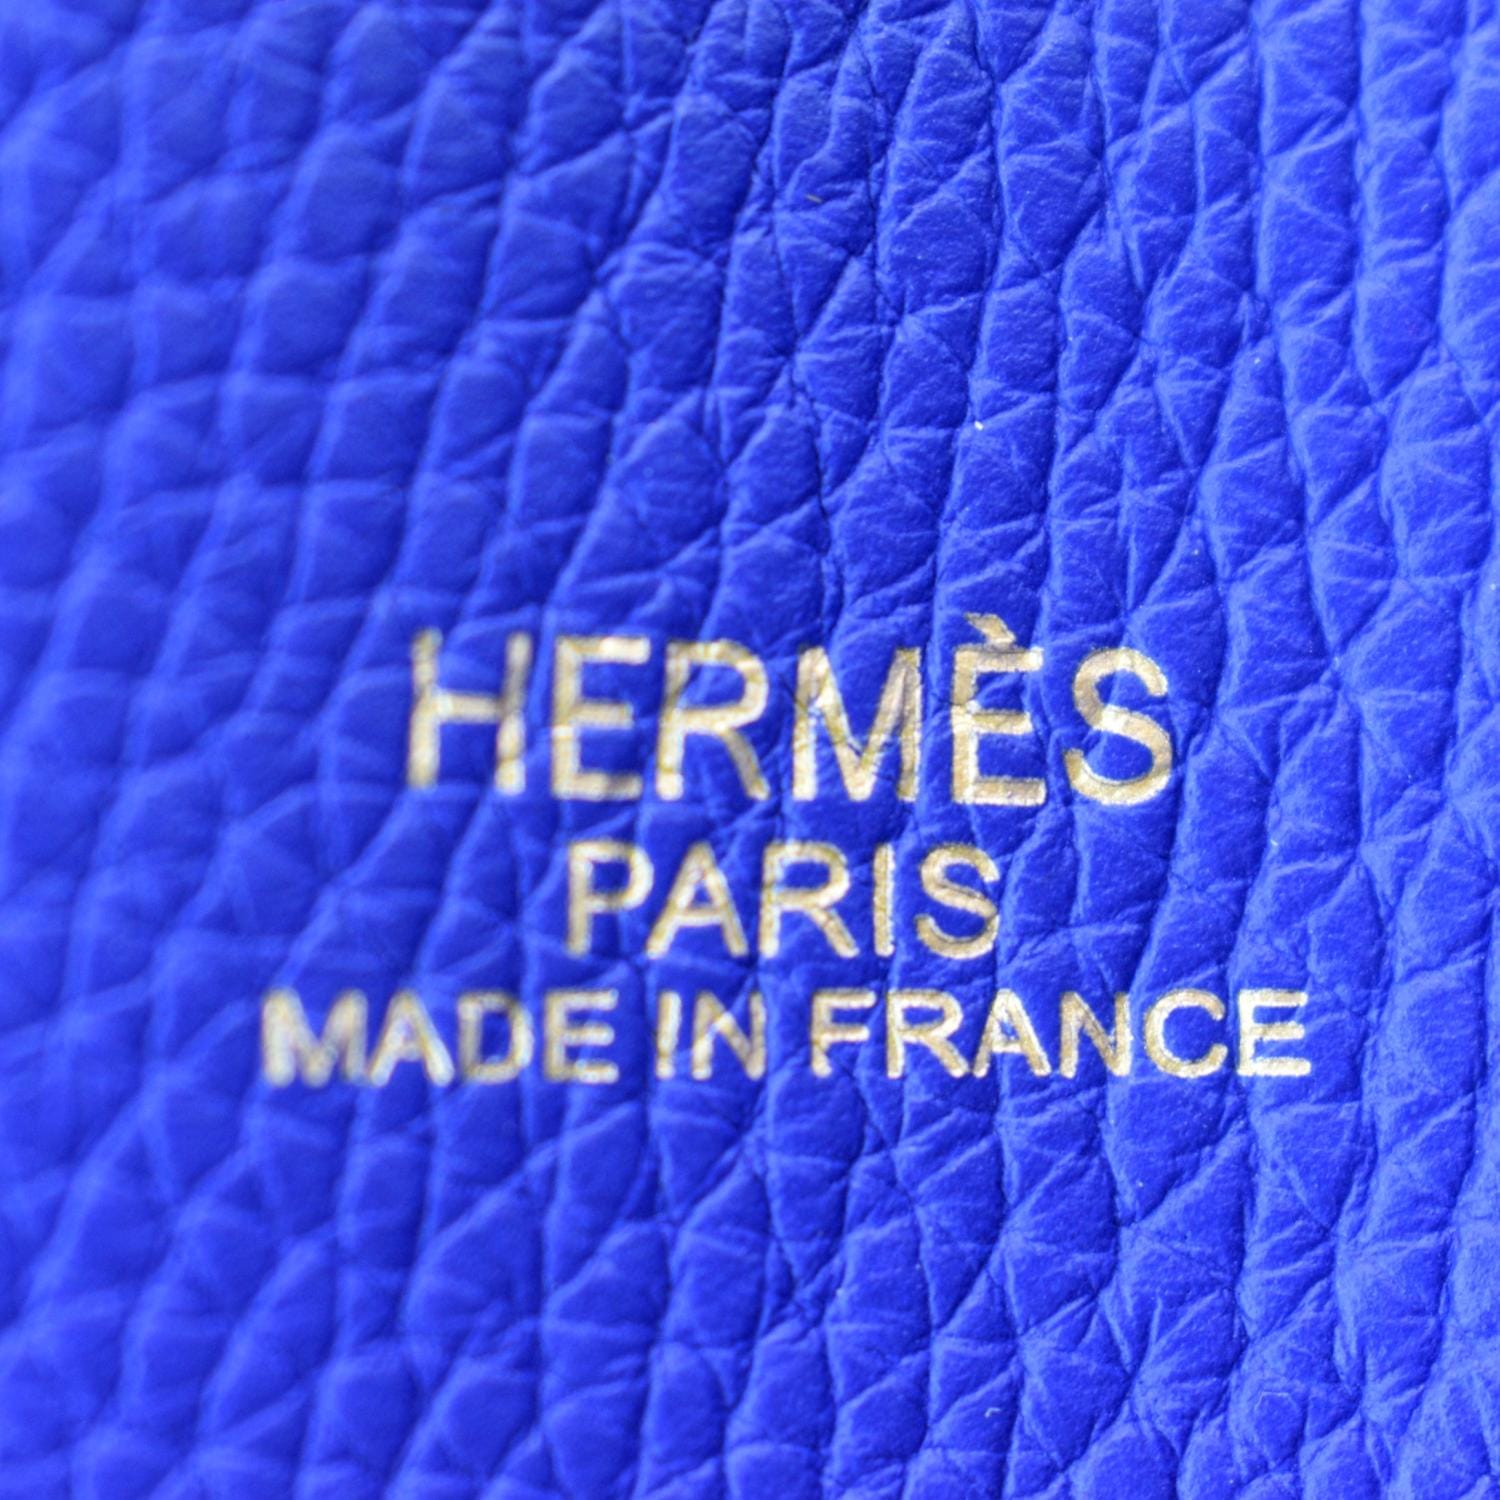 Hermes Double Sens Bag Clemence Leather In Black/Rose